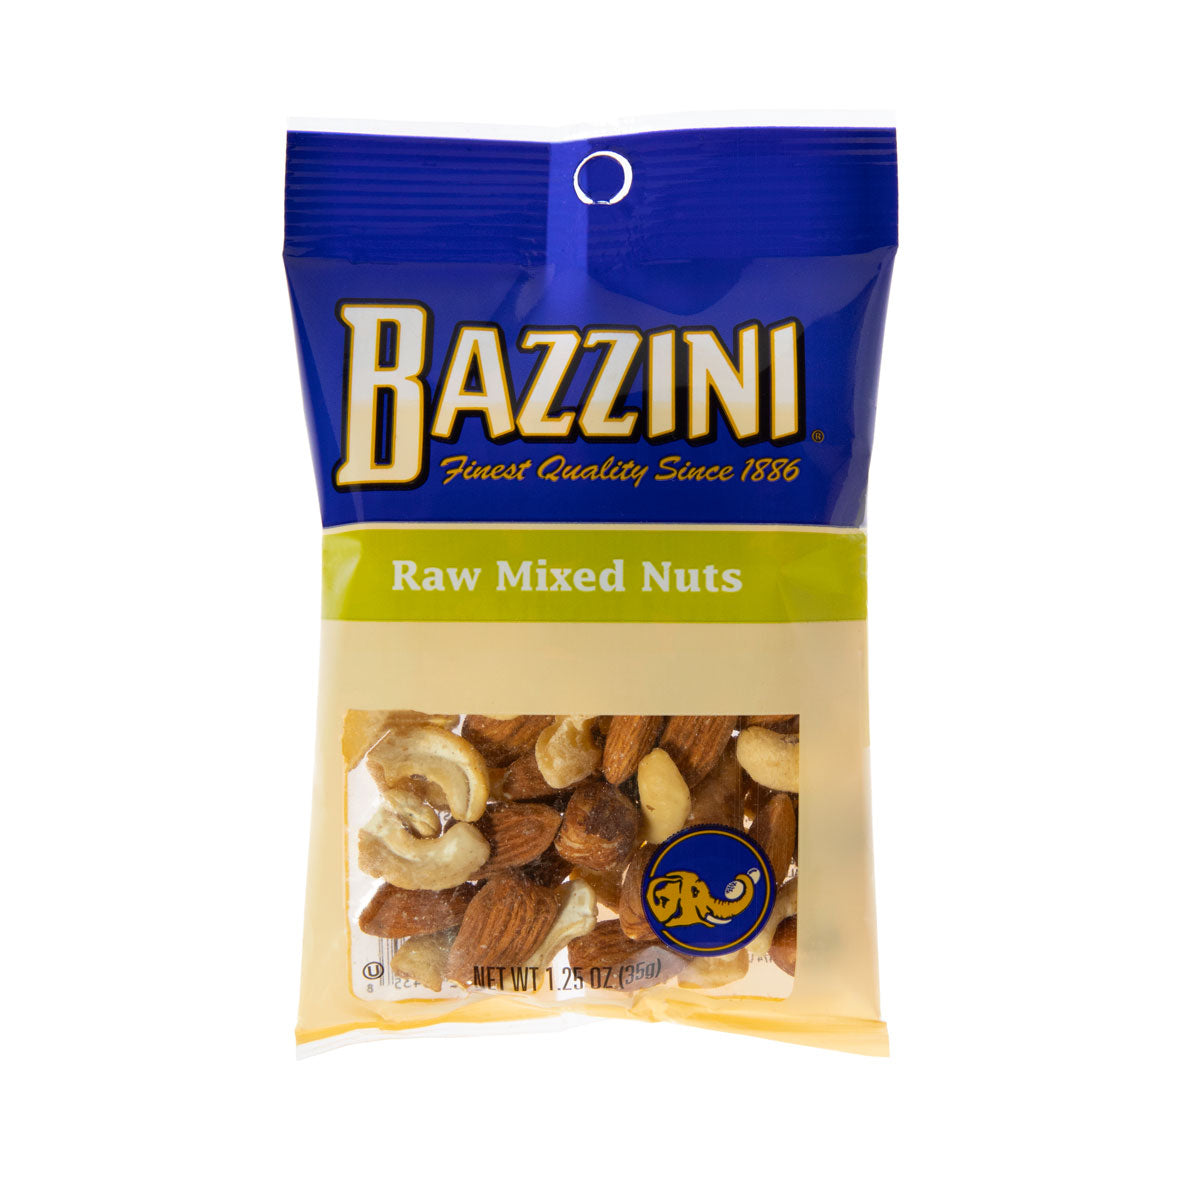 Bazzini Raw Mixed Nuts 1.25 oz